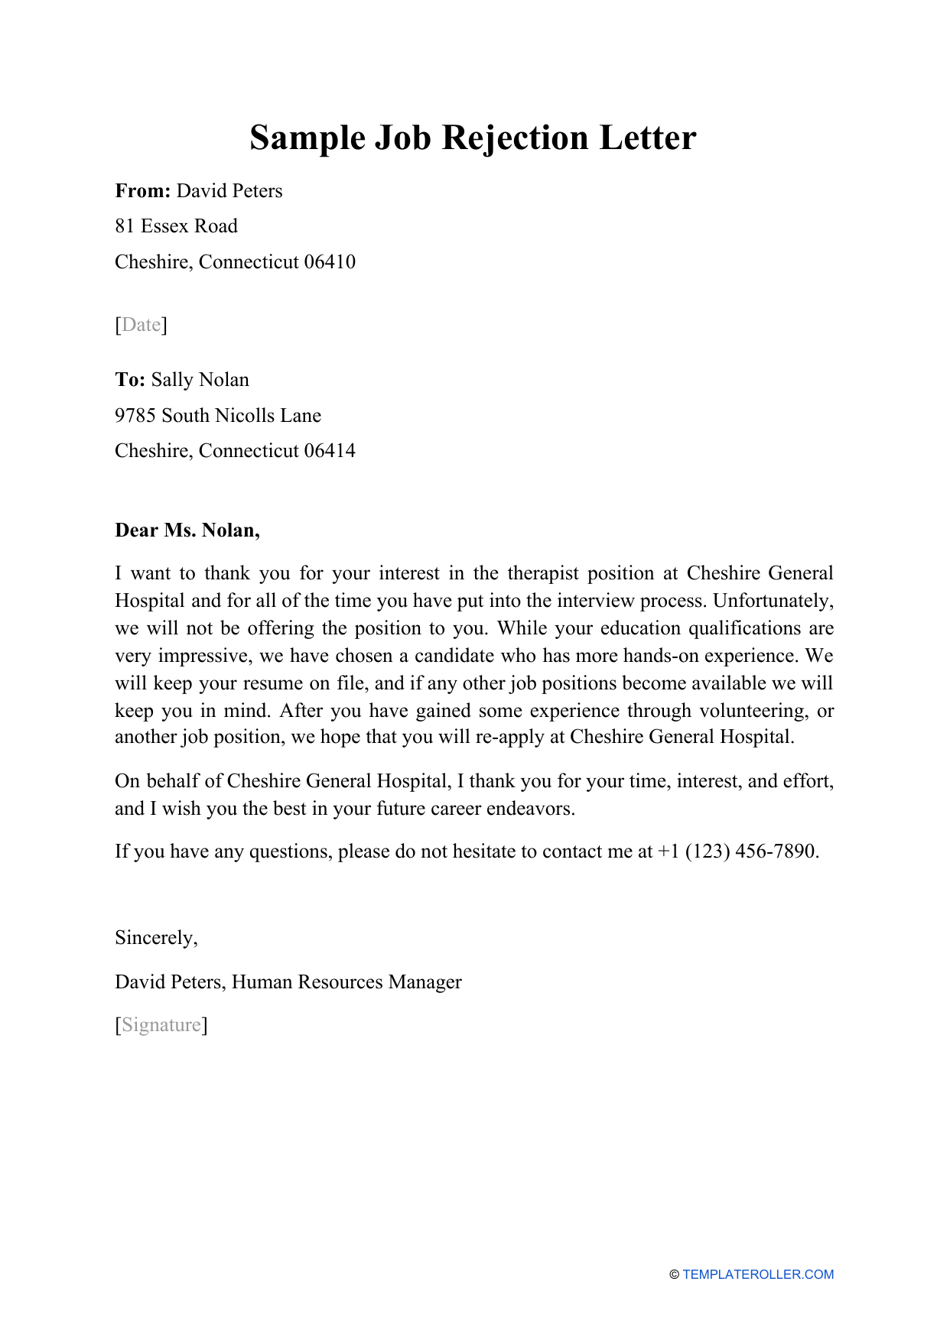 sample resume rejection email